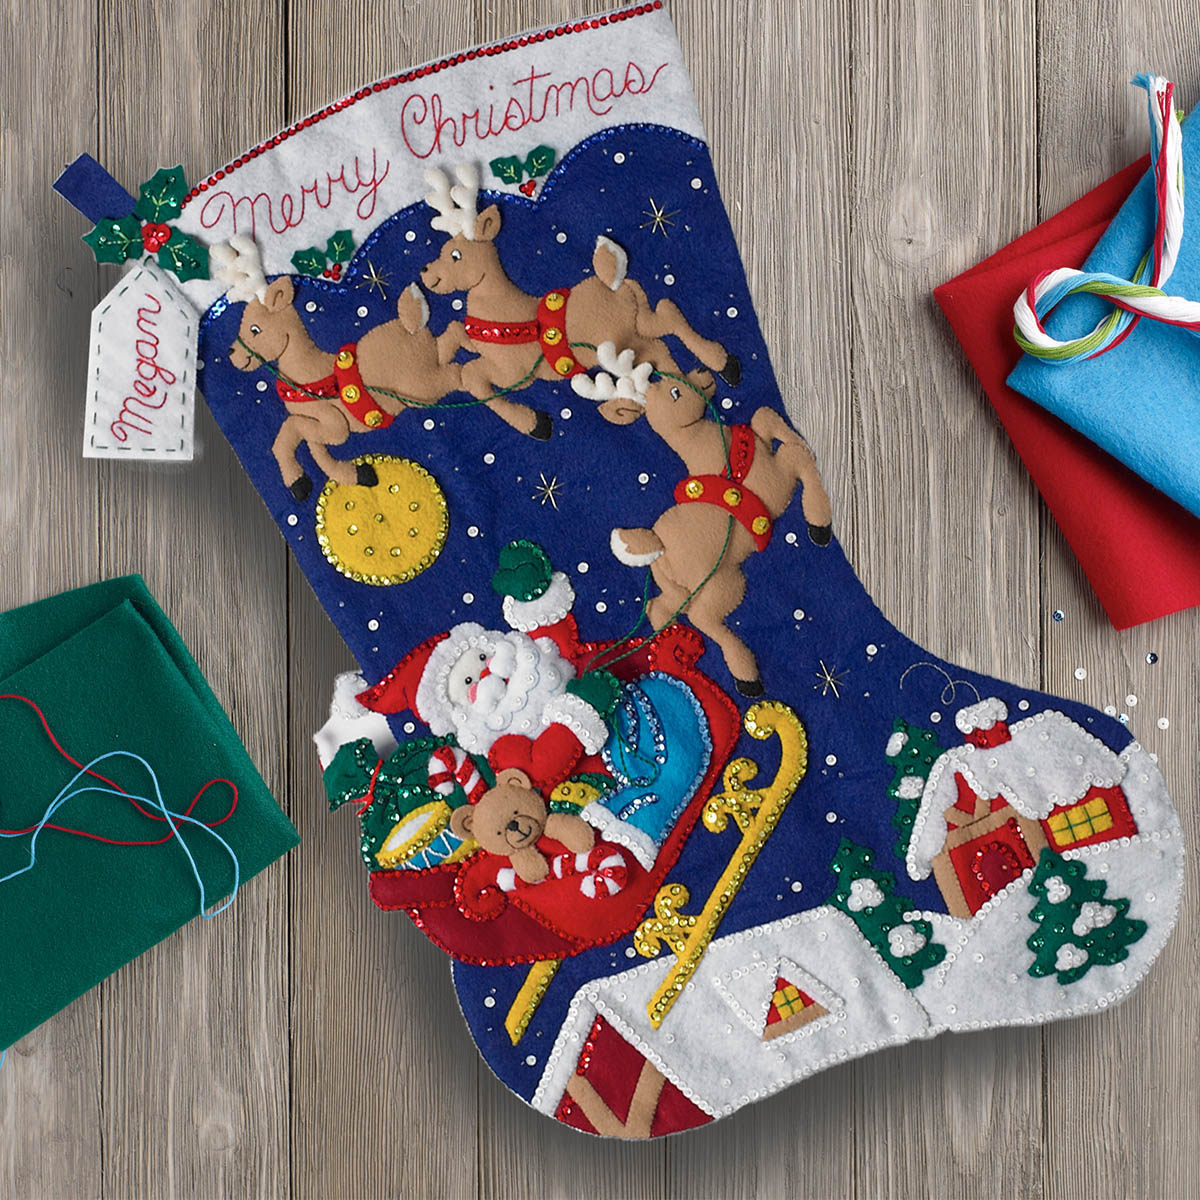 Bucilla ® Seasonal - Felt - Stocking Kits - Christmas Night Jumbo Stocking - 86740